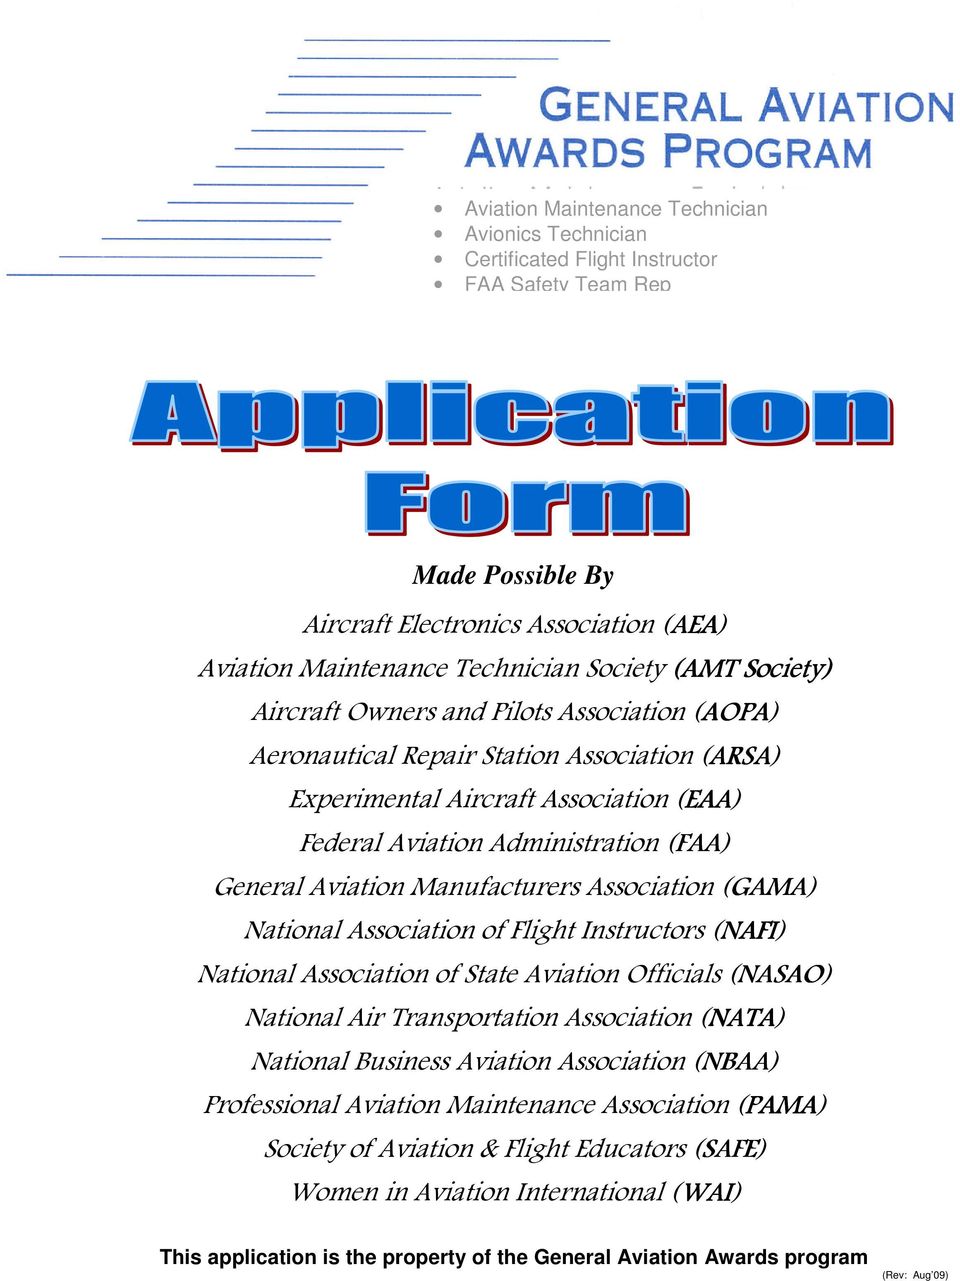 Aviation Manufacturers Association (GAMA) National Association of Flight Instructors (NAFI) National Association of State Aviation Officials (NASAO) National Air Transportation Association (NATA)